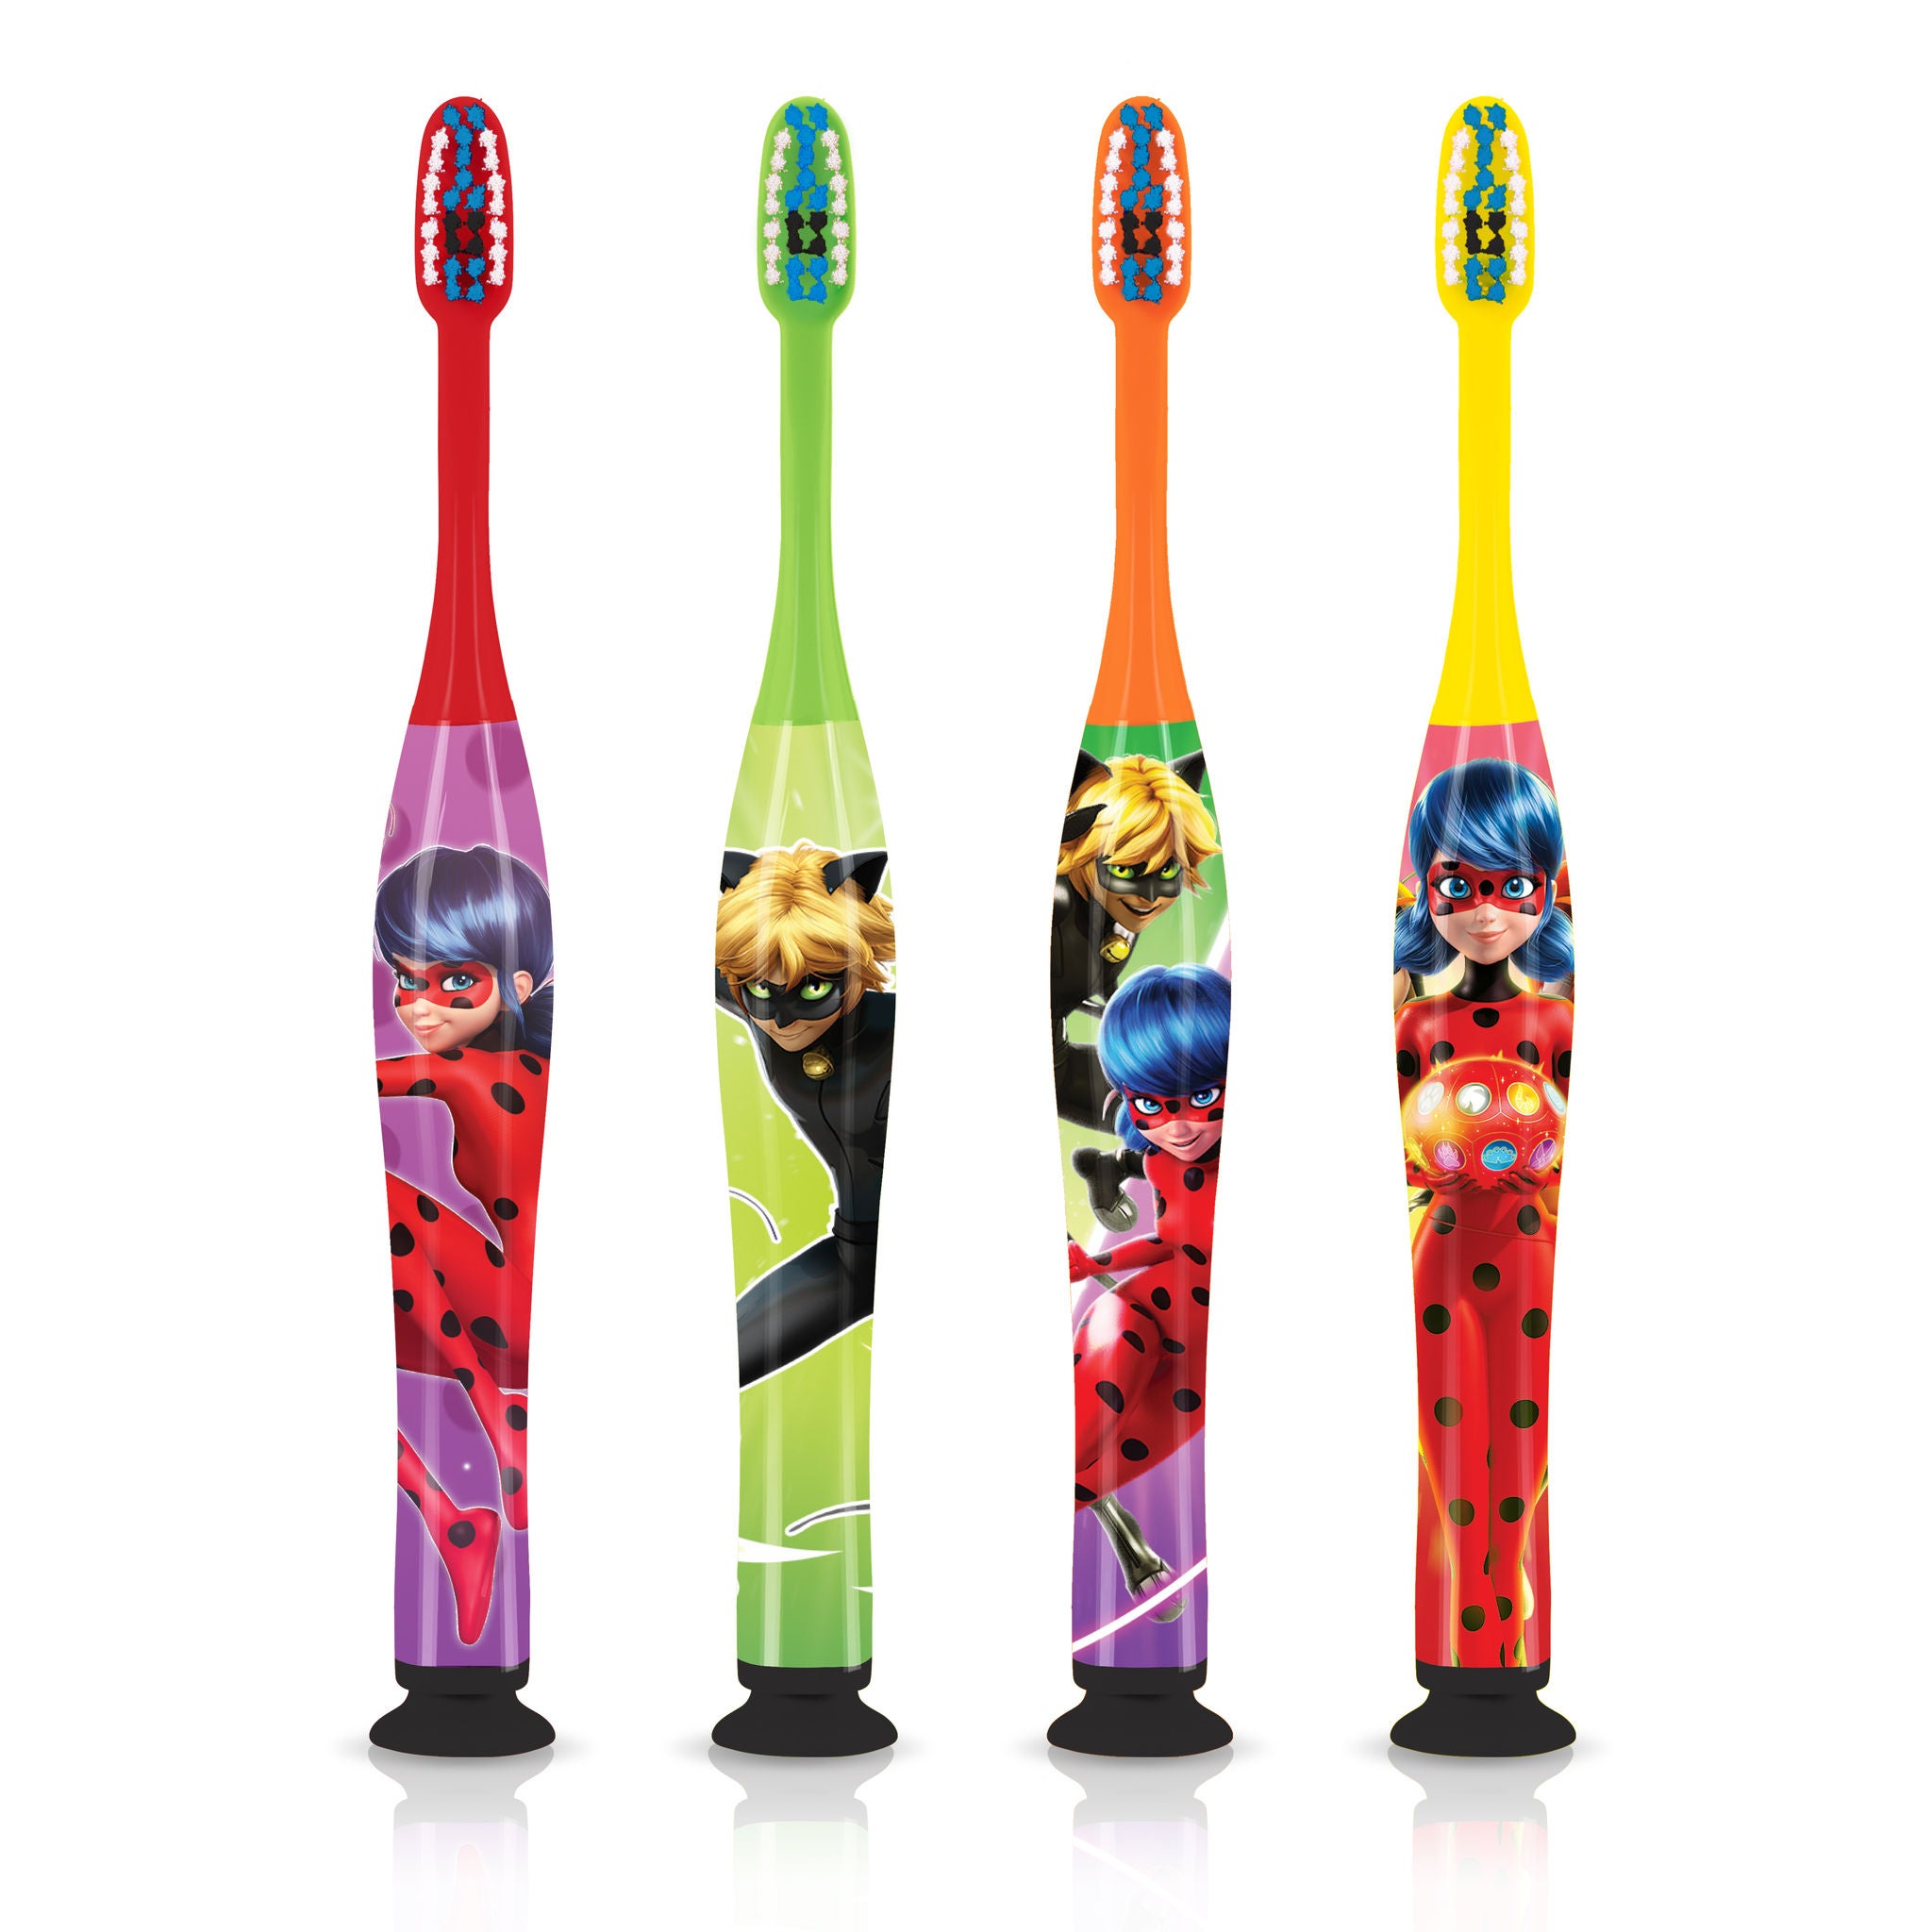 4060-Product-Toothbrush-Manual-Ladybug-naked-4colors.jpg